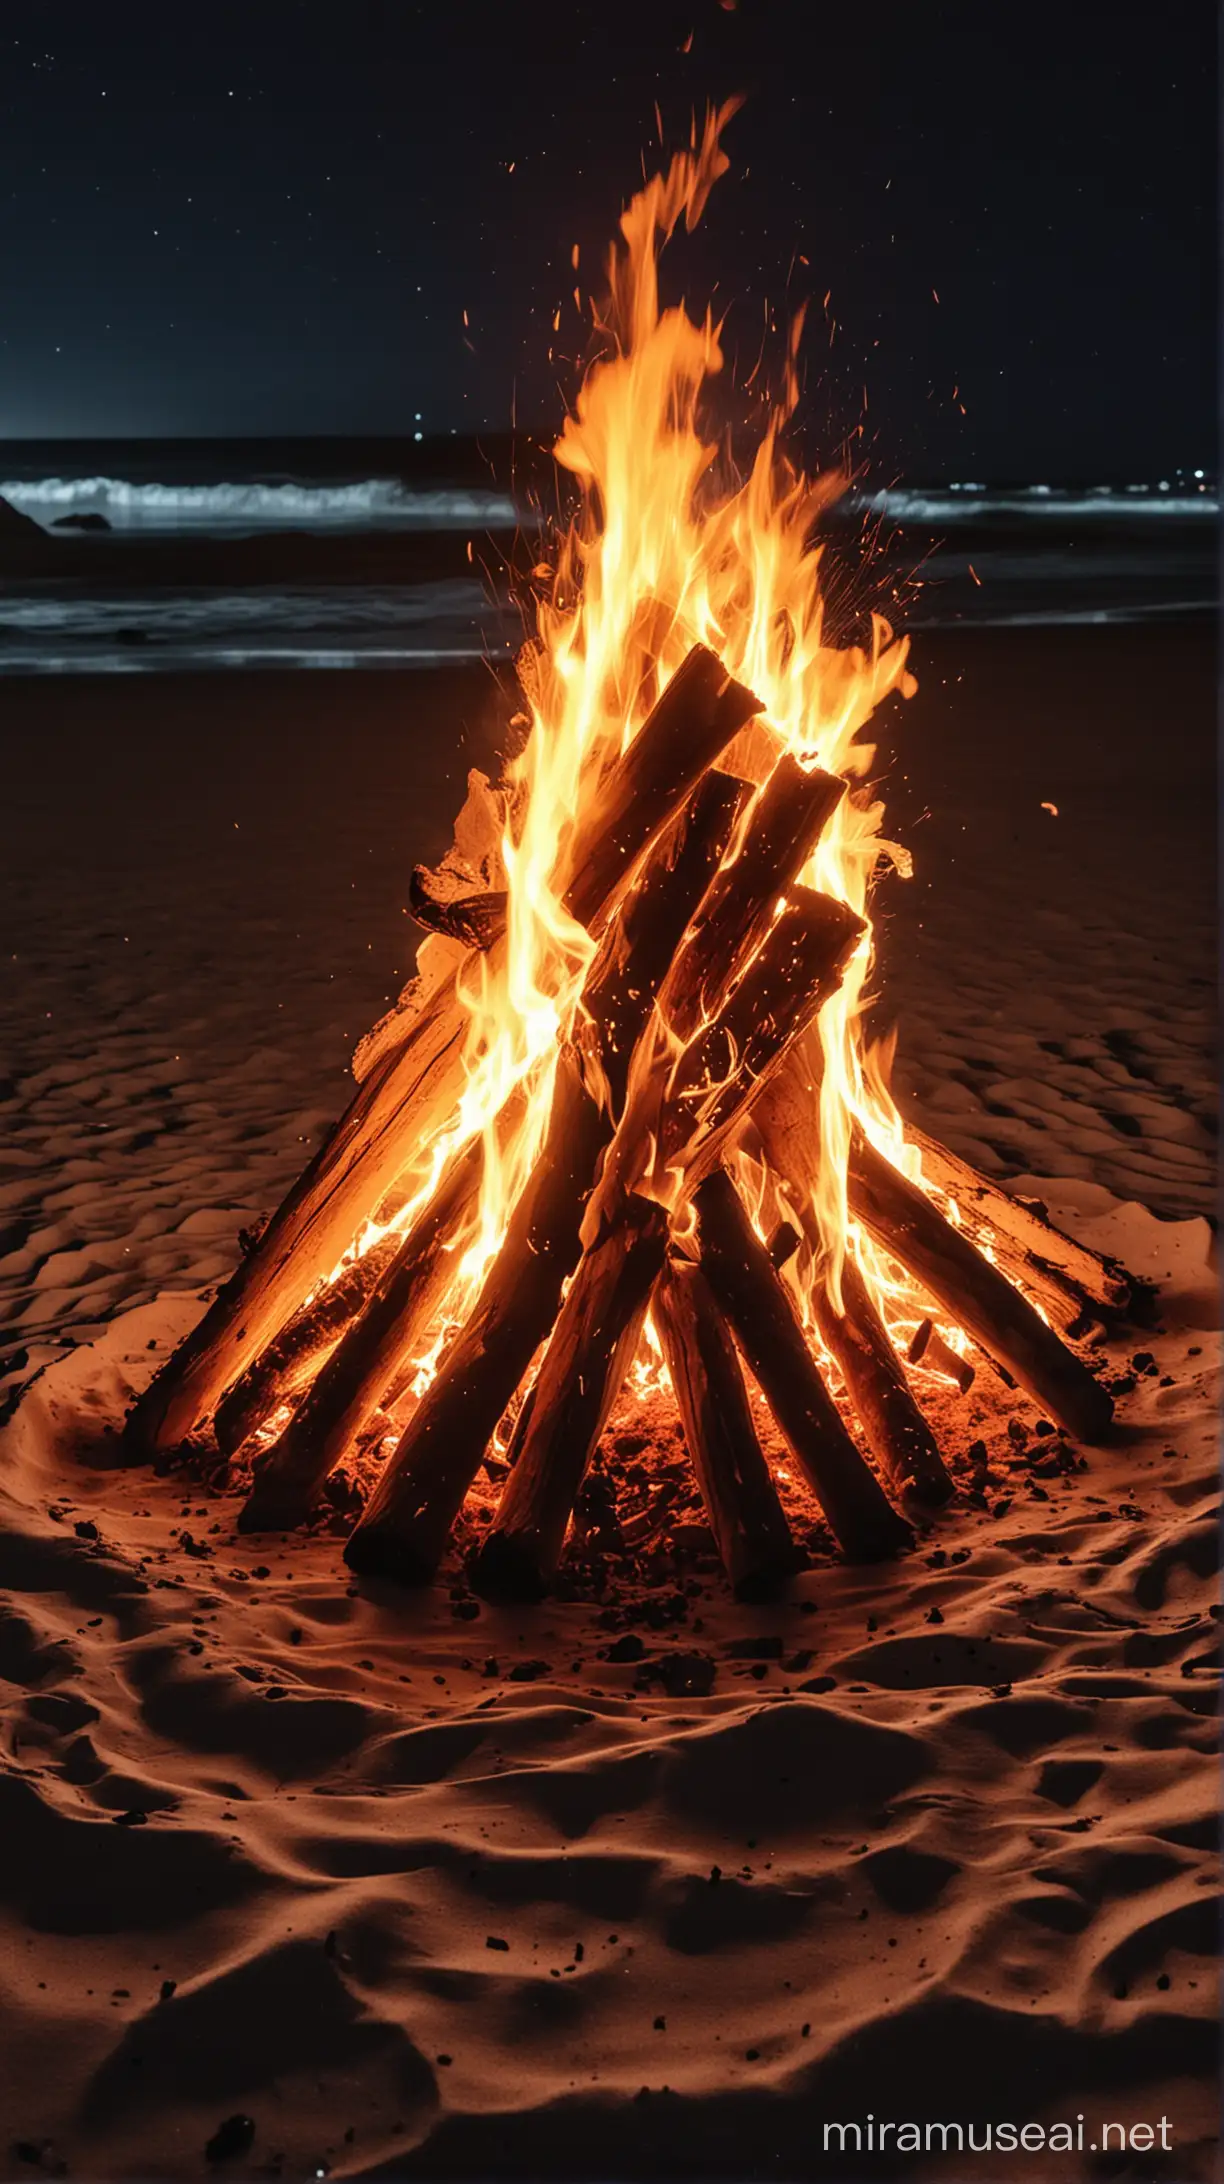 Di pinggir sebuah pantai pada malam hari tampak dari dekat sebuah api unggun kecil dengan api yang menyala dan membara.